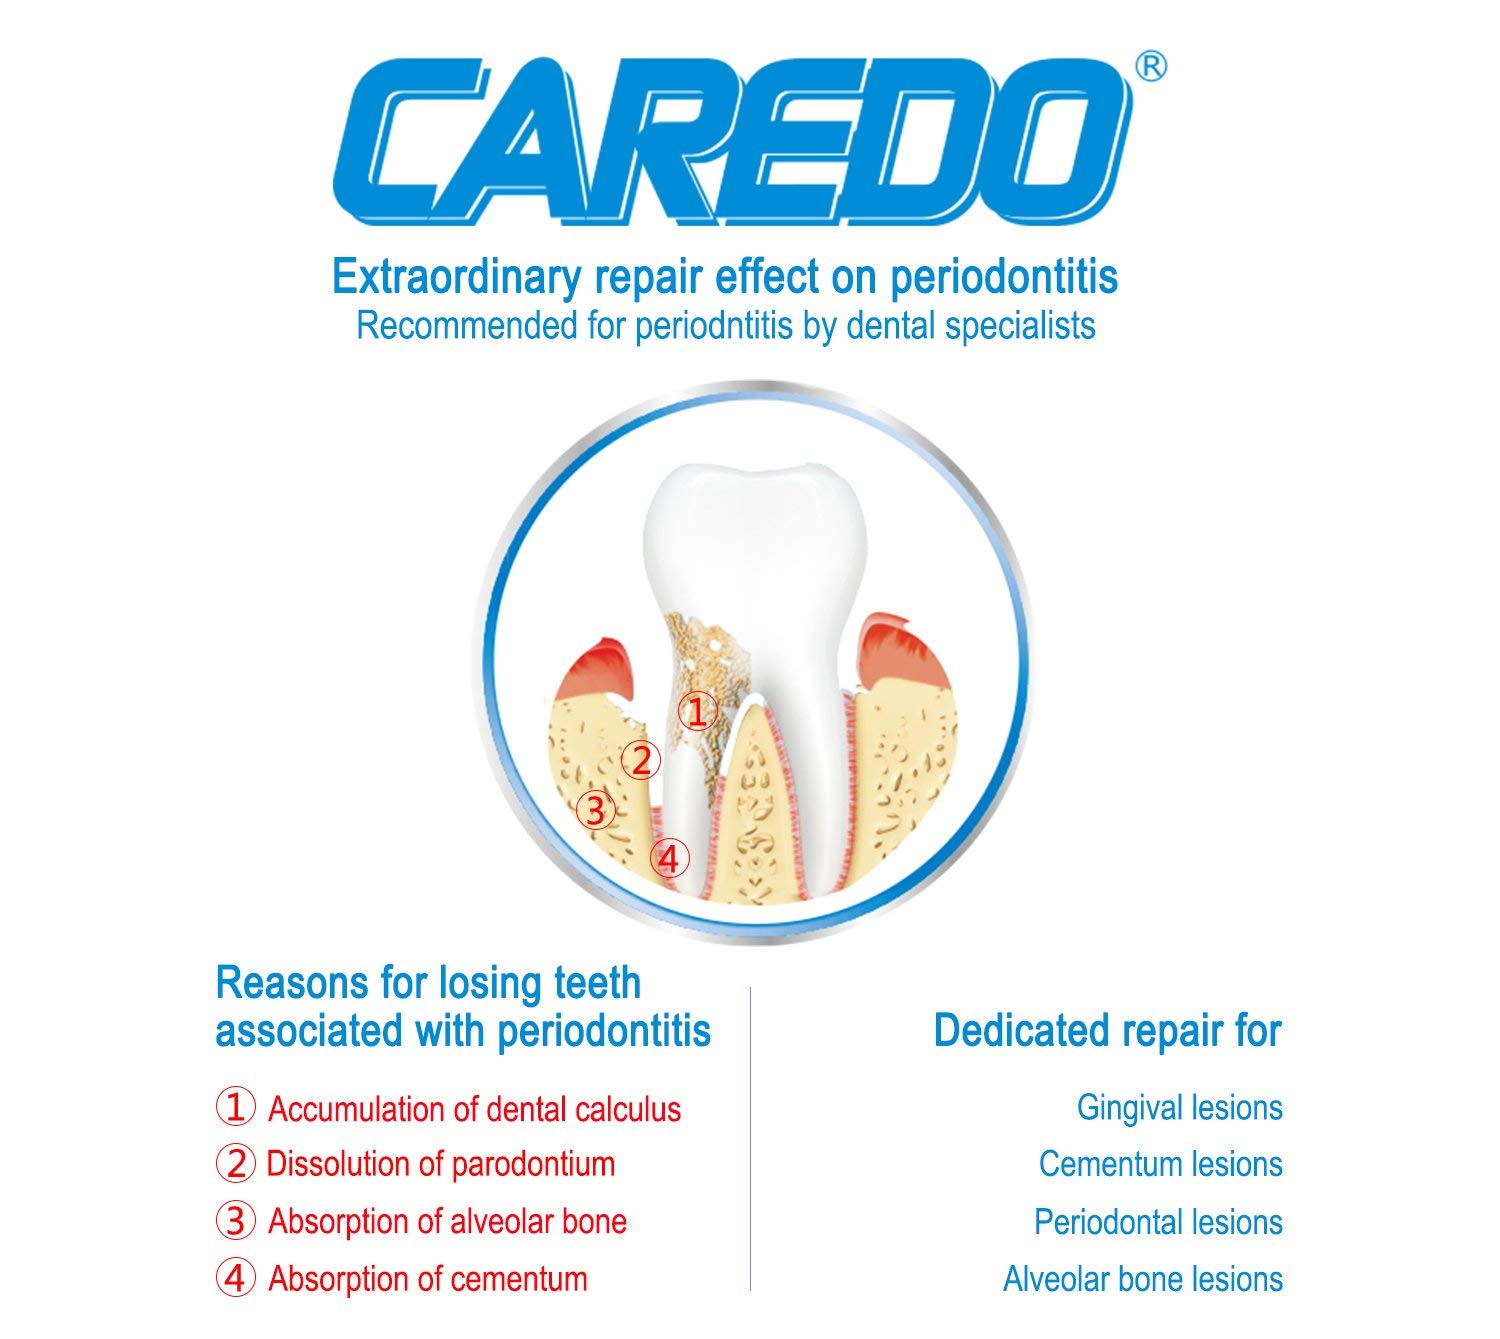 CAREDO Healing Periodontitis Treatment At Home Toothpaste, Periodontal Disease Treatment 3.52oz, Gingivitis Treatment & Gum Dise